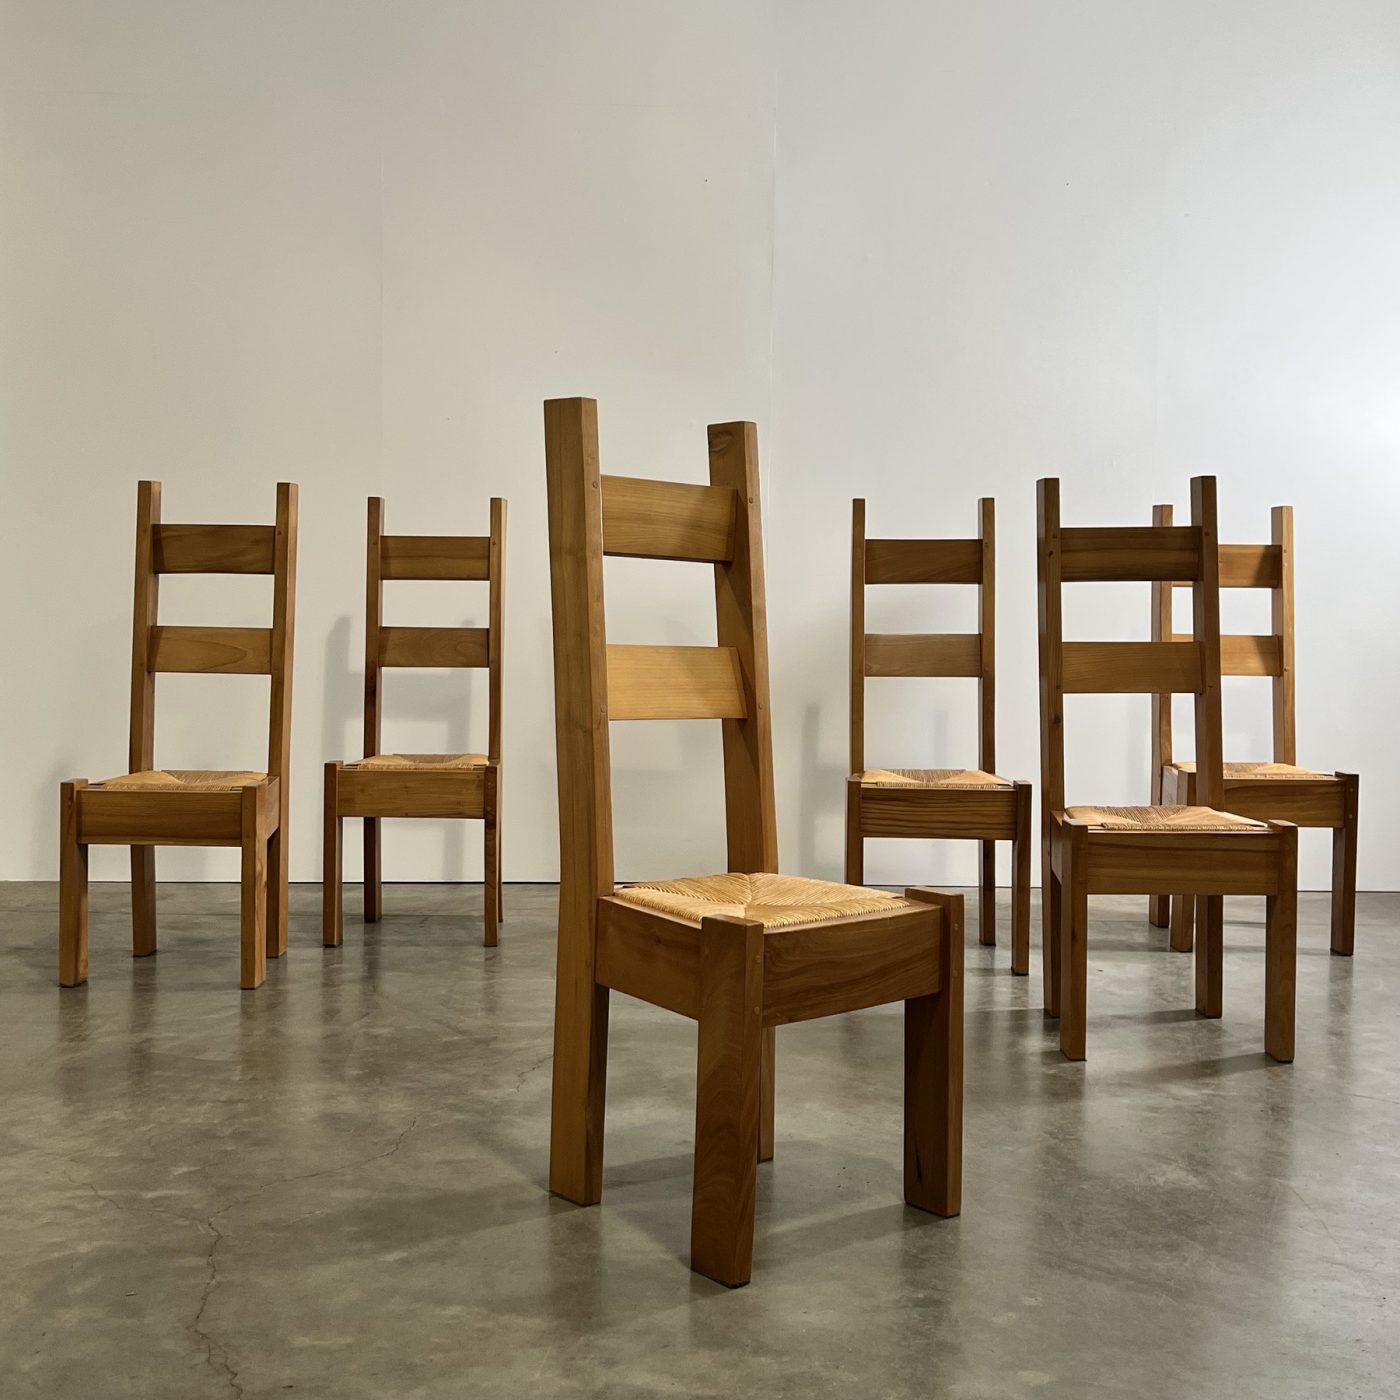 objet-vagabond-brutalist-chairs0007